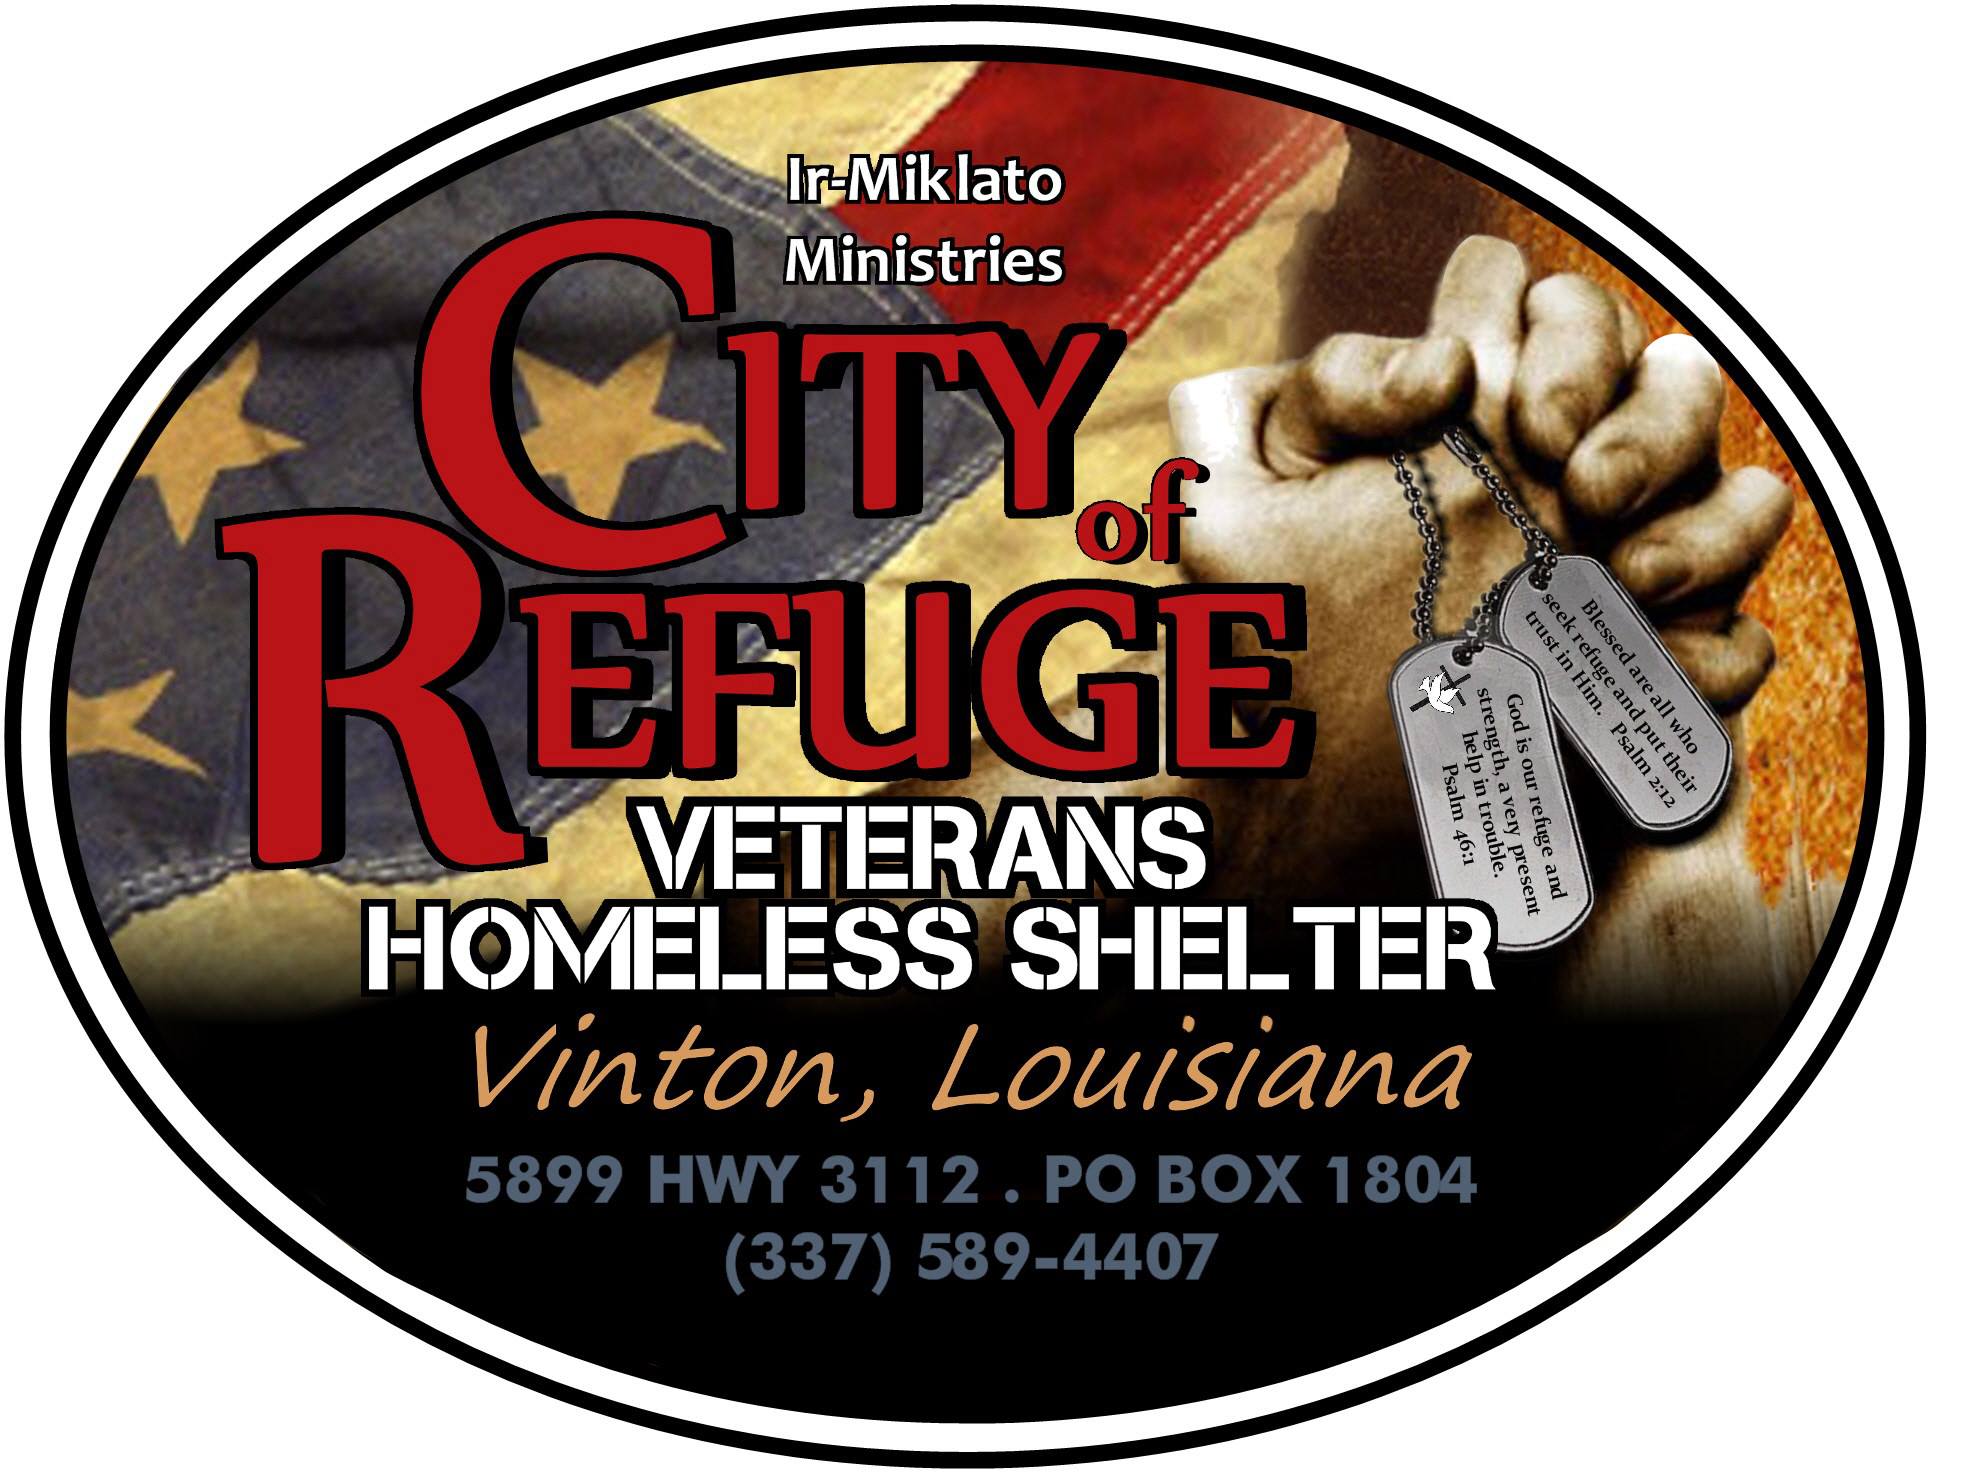 Home for Heroes Veterans Homeless Shelter - A City of Refuge Veterans Homeless Shelter for men